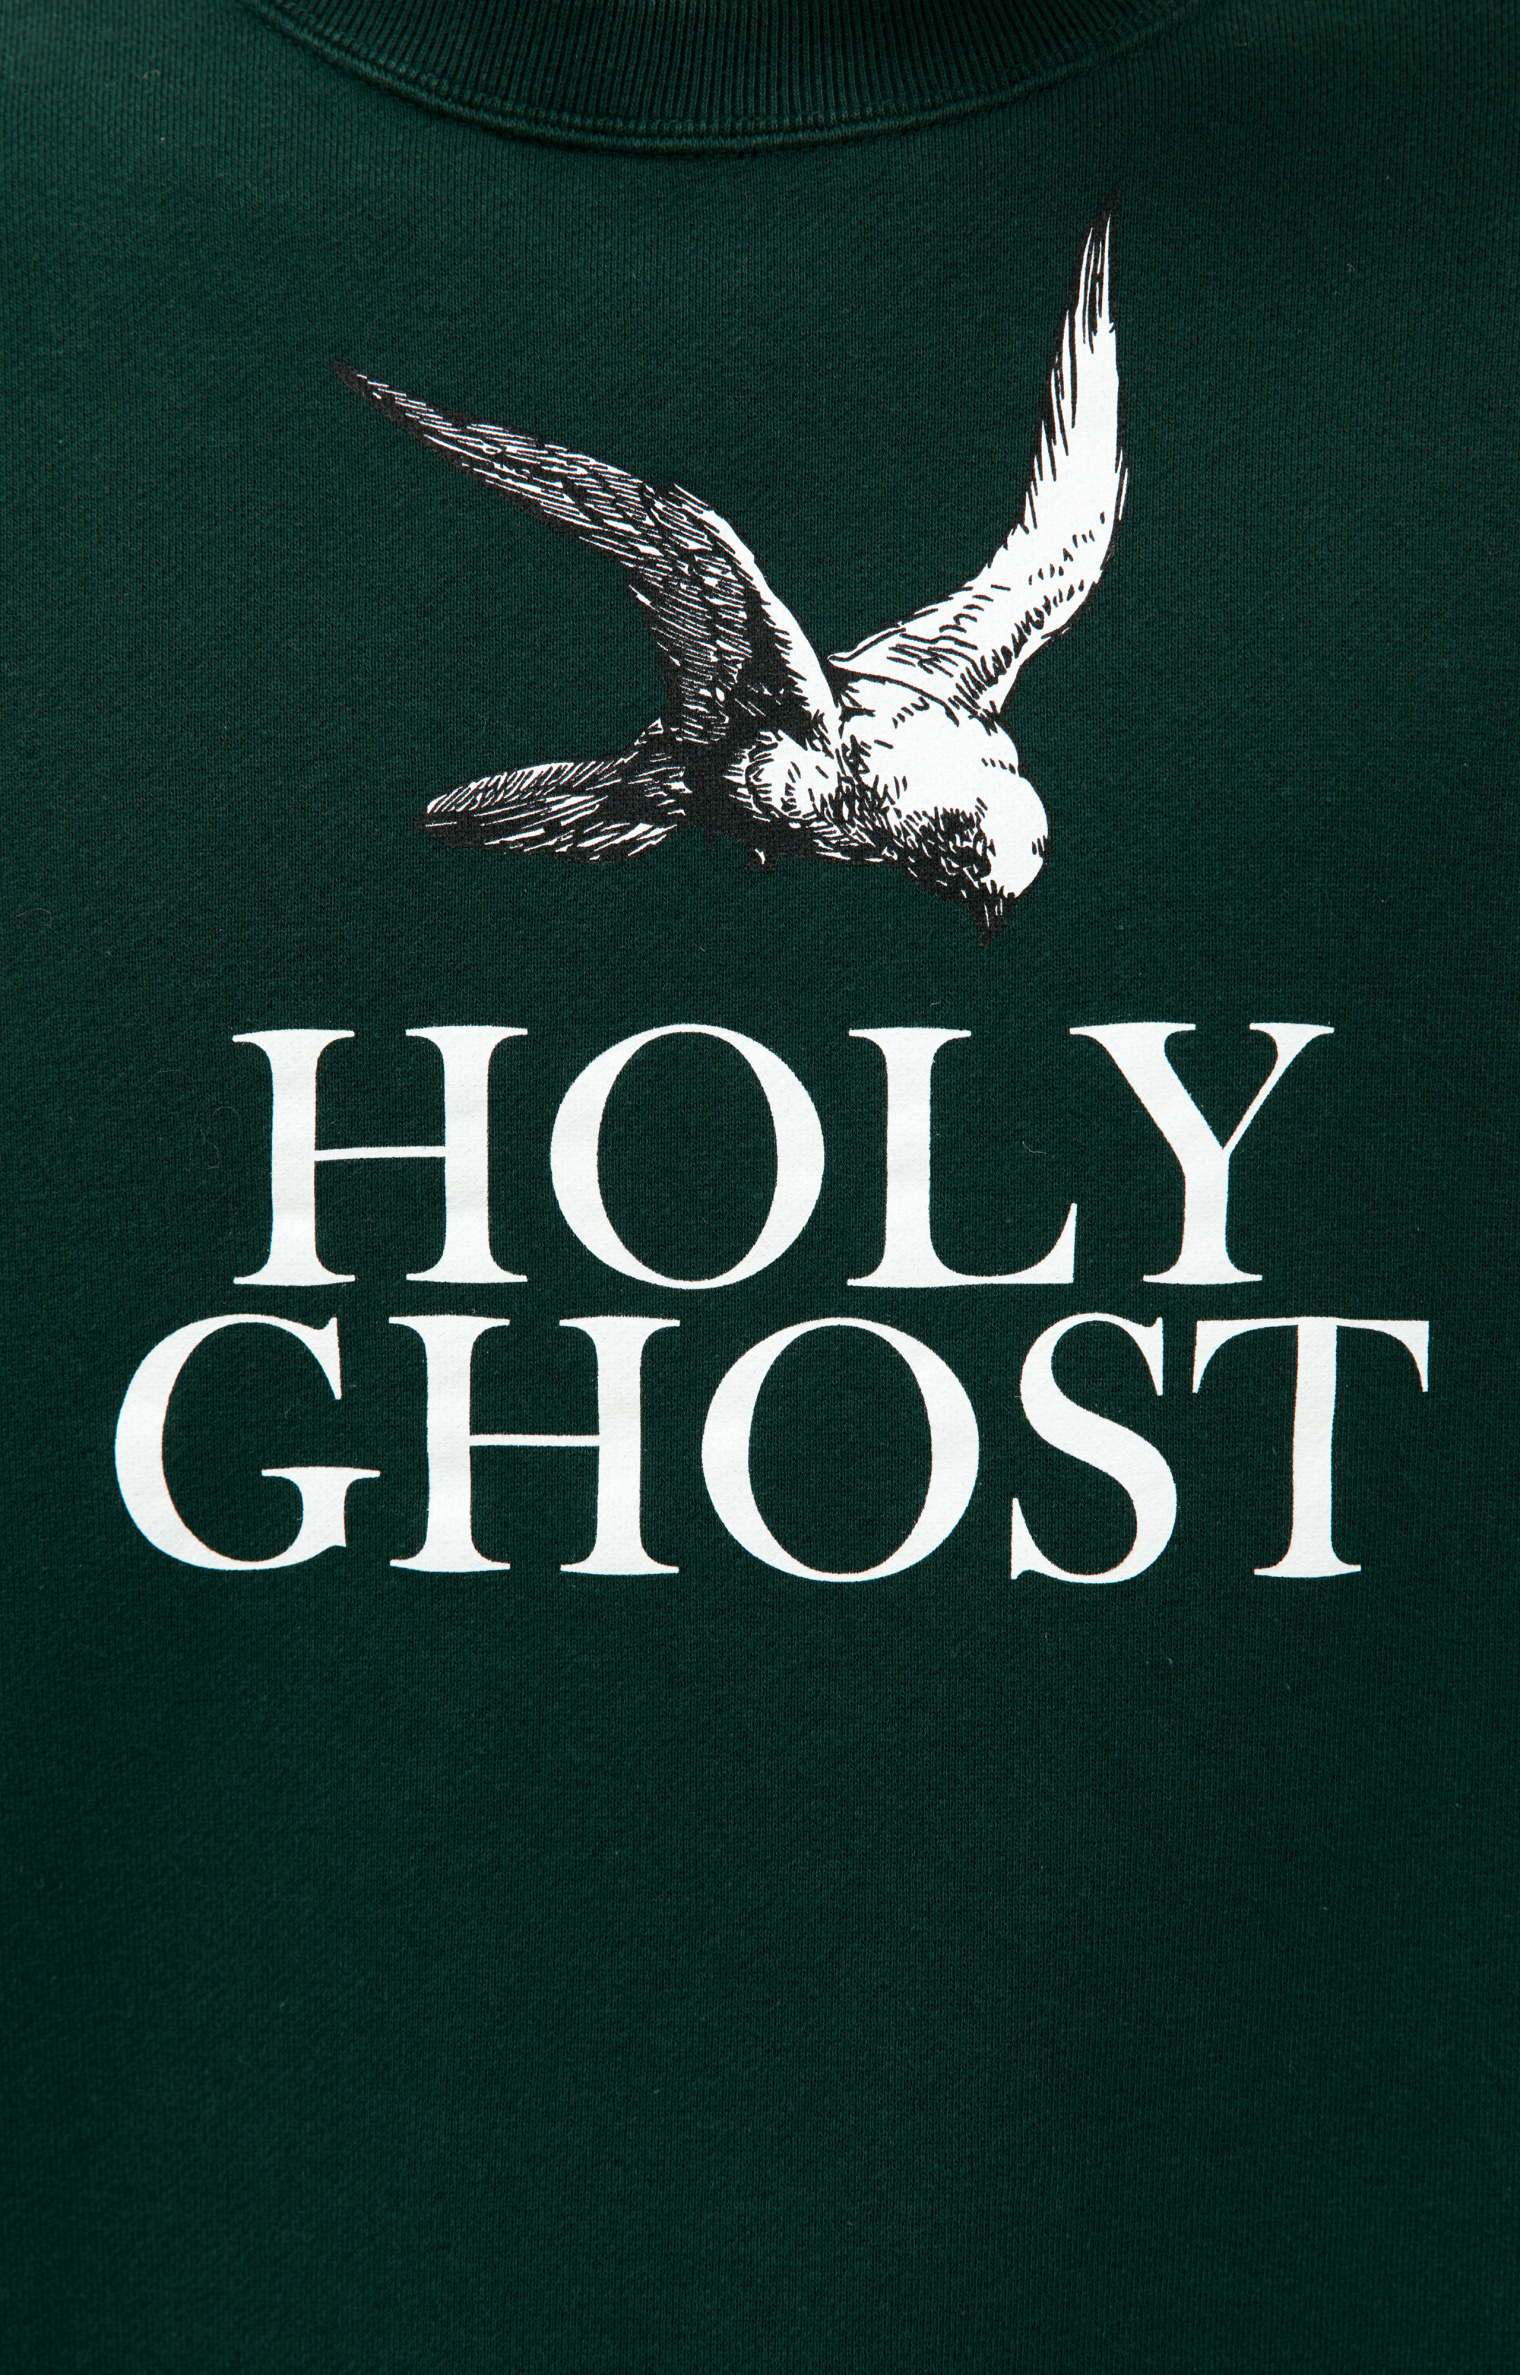 Undercover \'Holy ghost\' printed sweatshirt